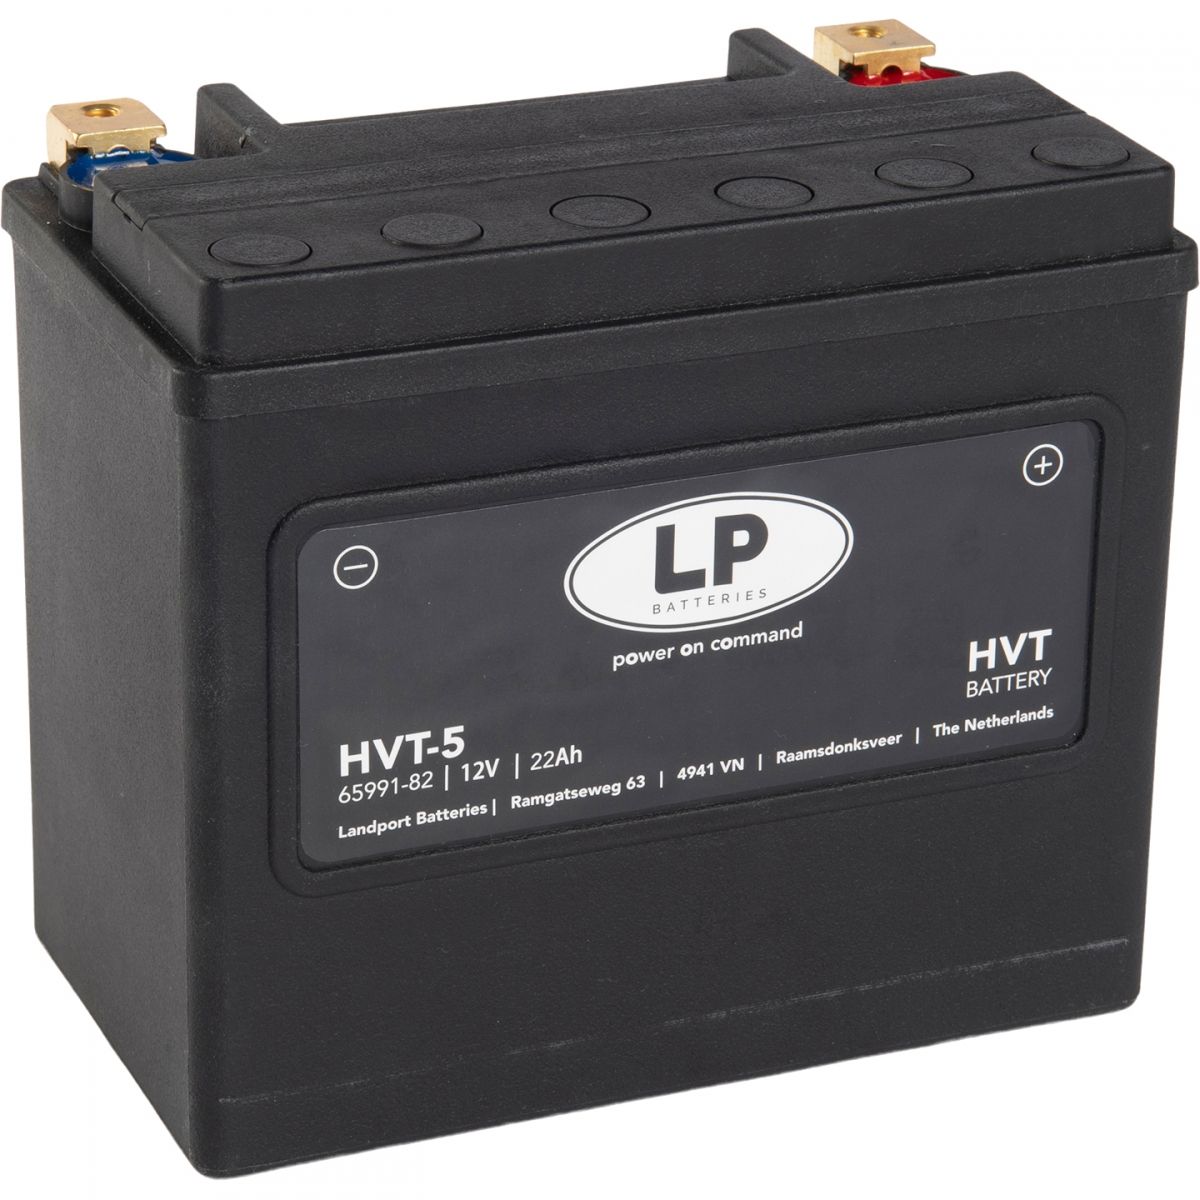 Lp batteries. Аккумулятор LP 12n24-4. HVT.